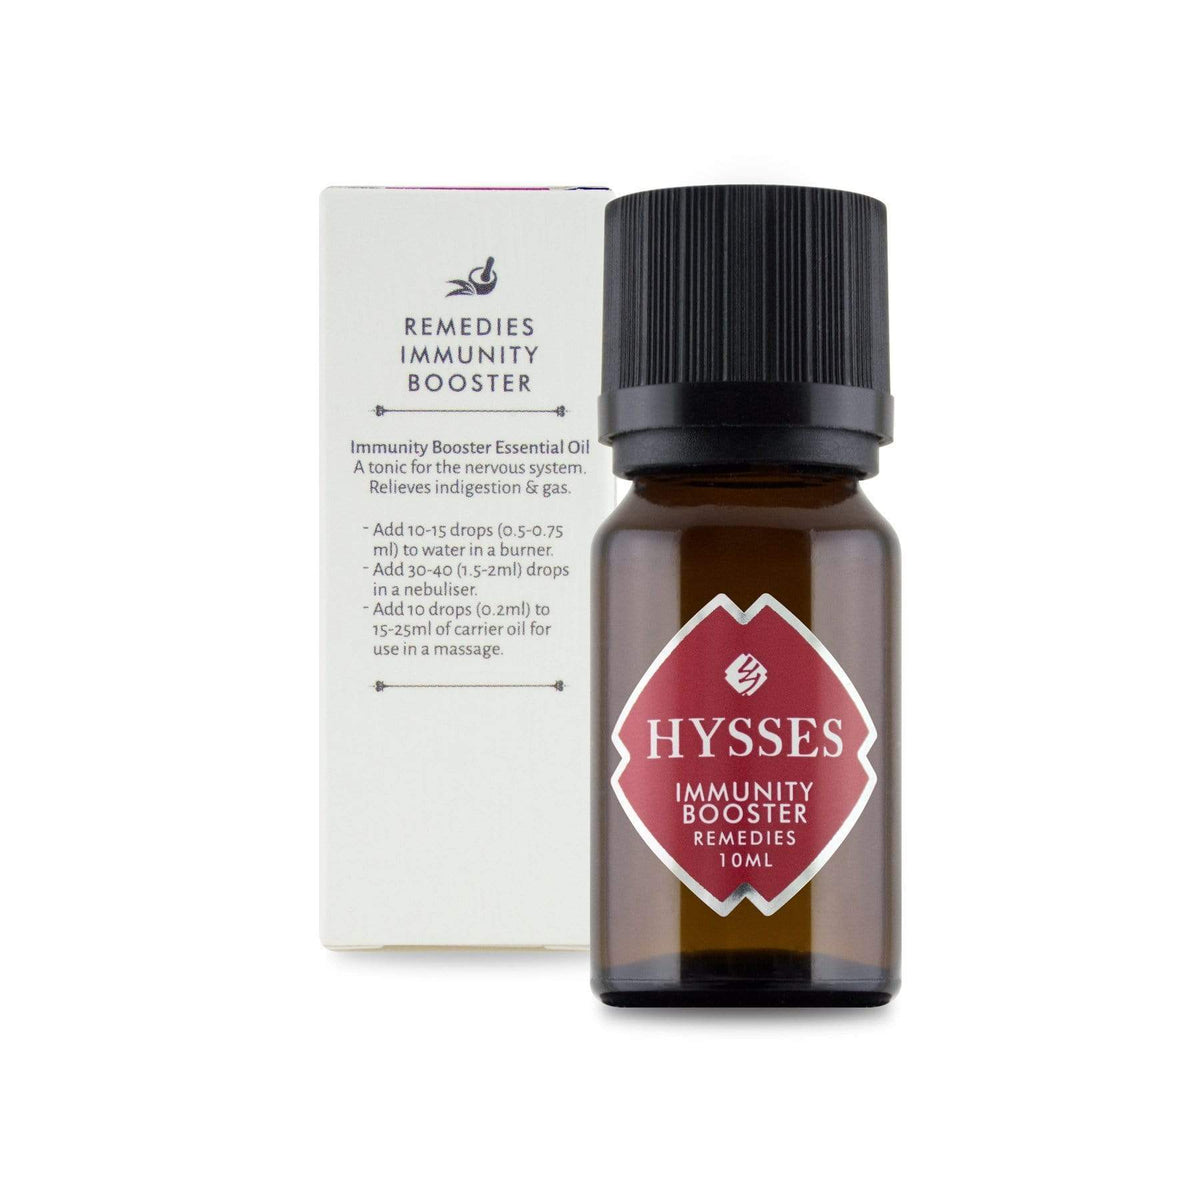 Hysses Essential Oil Remedies, Immunity Booster, 10ml